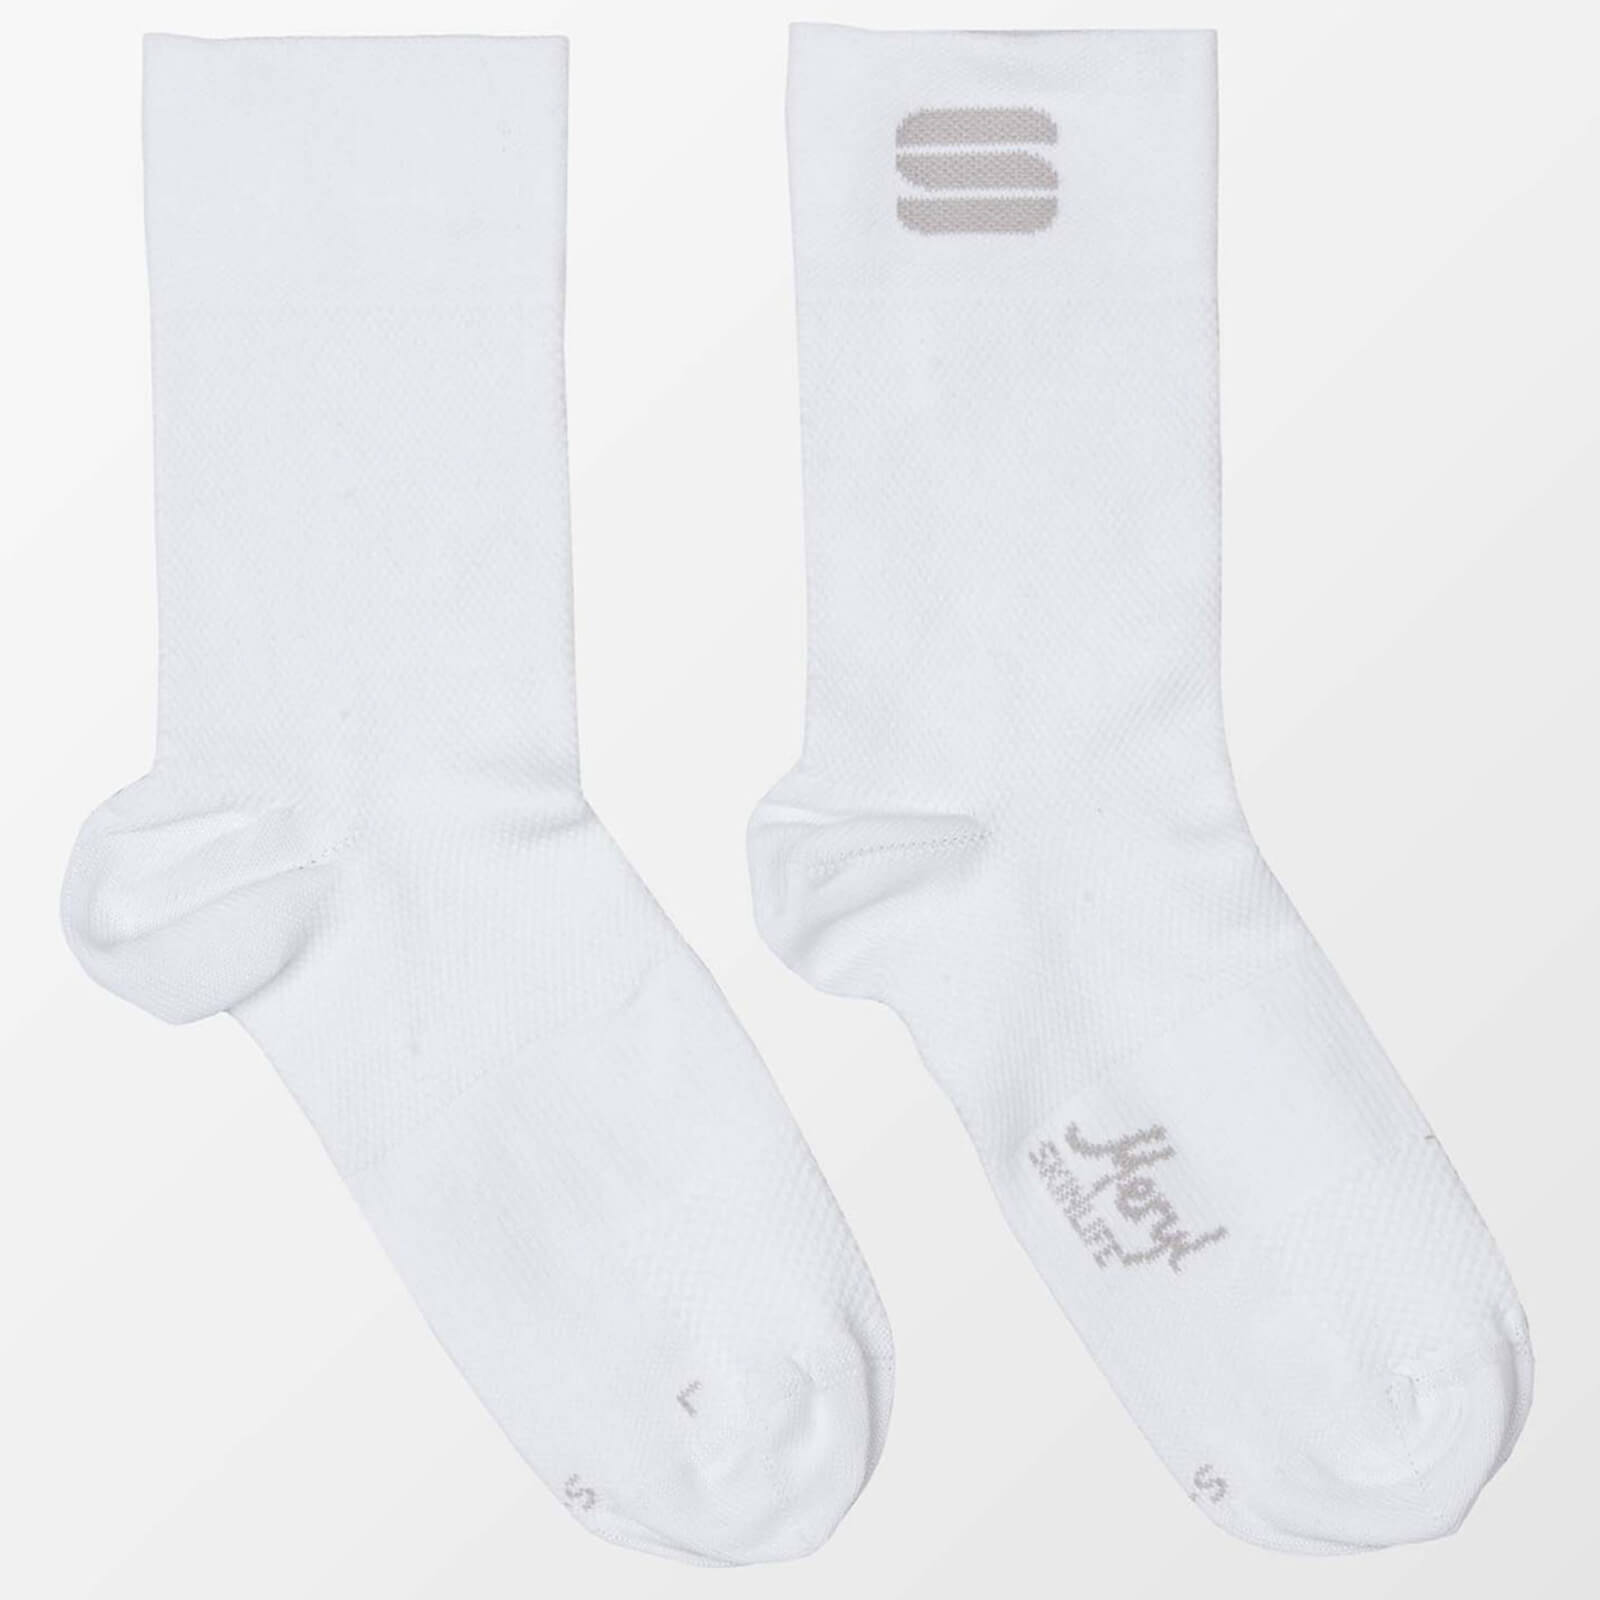 Sportful Women's Matchy Socks - S/M - White